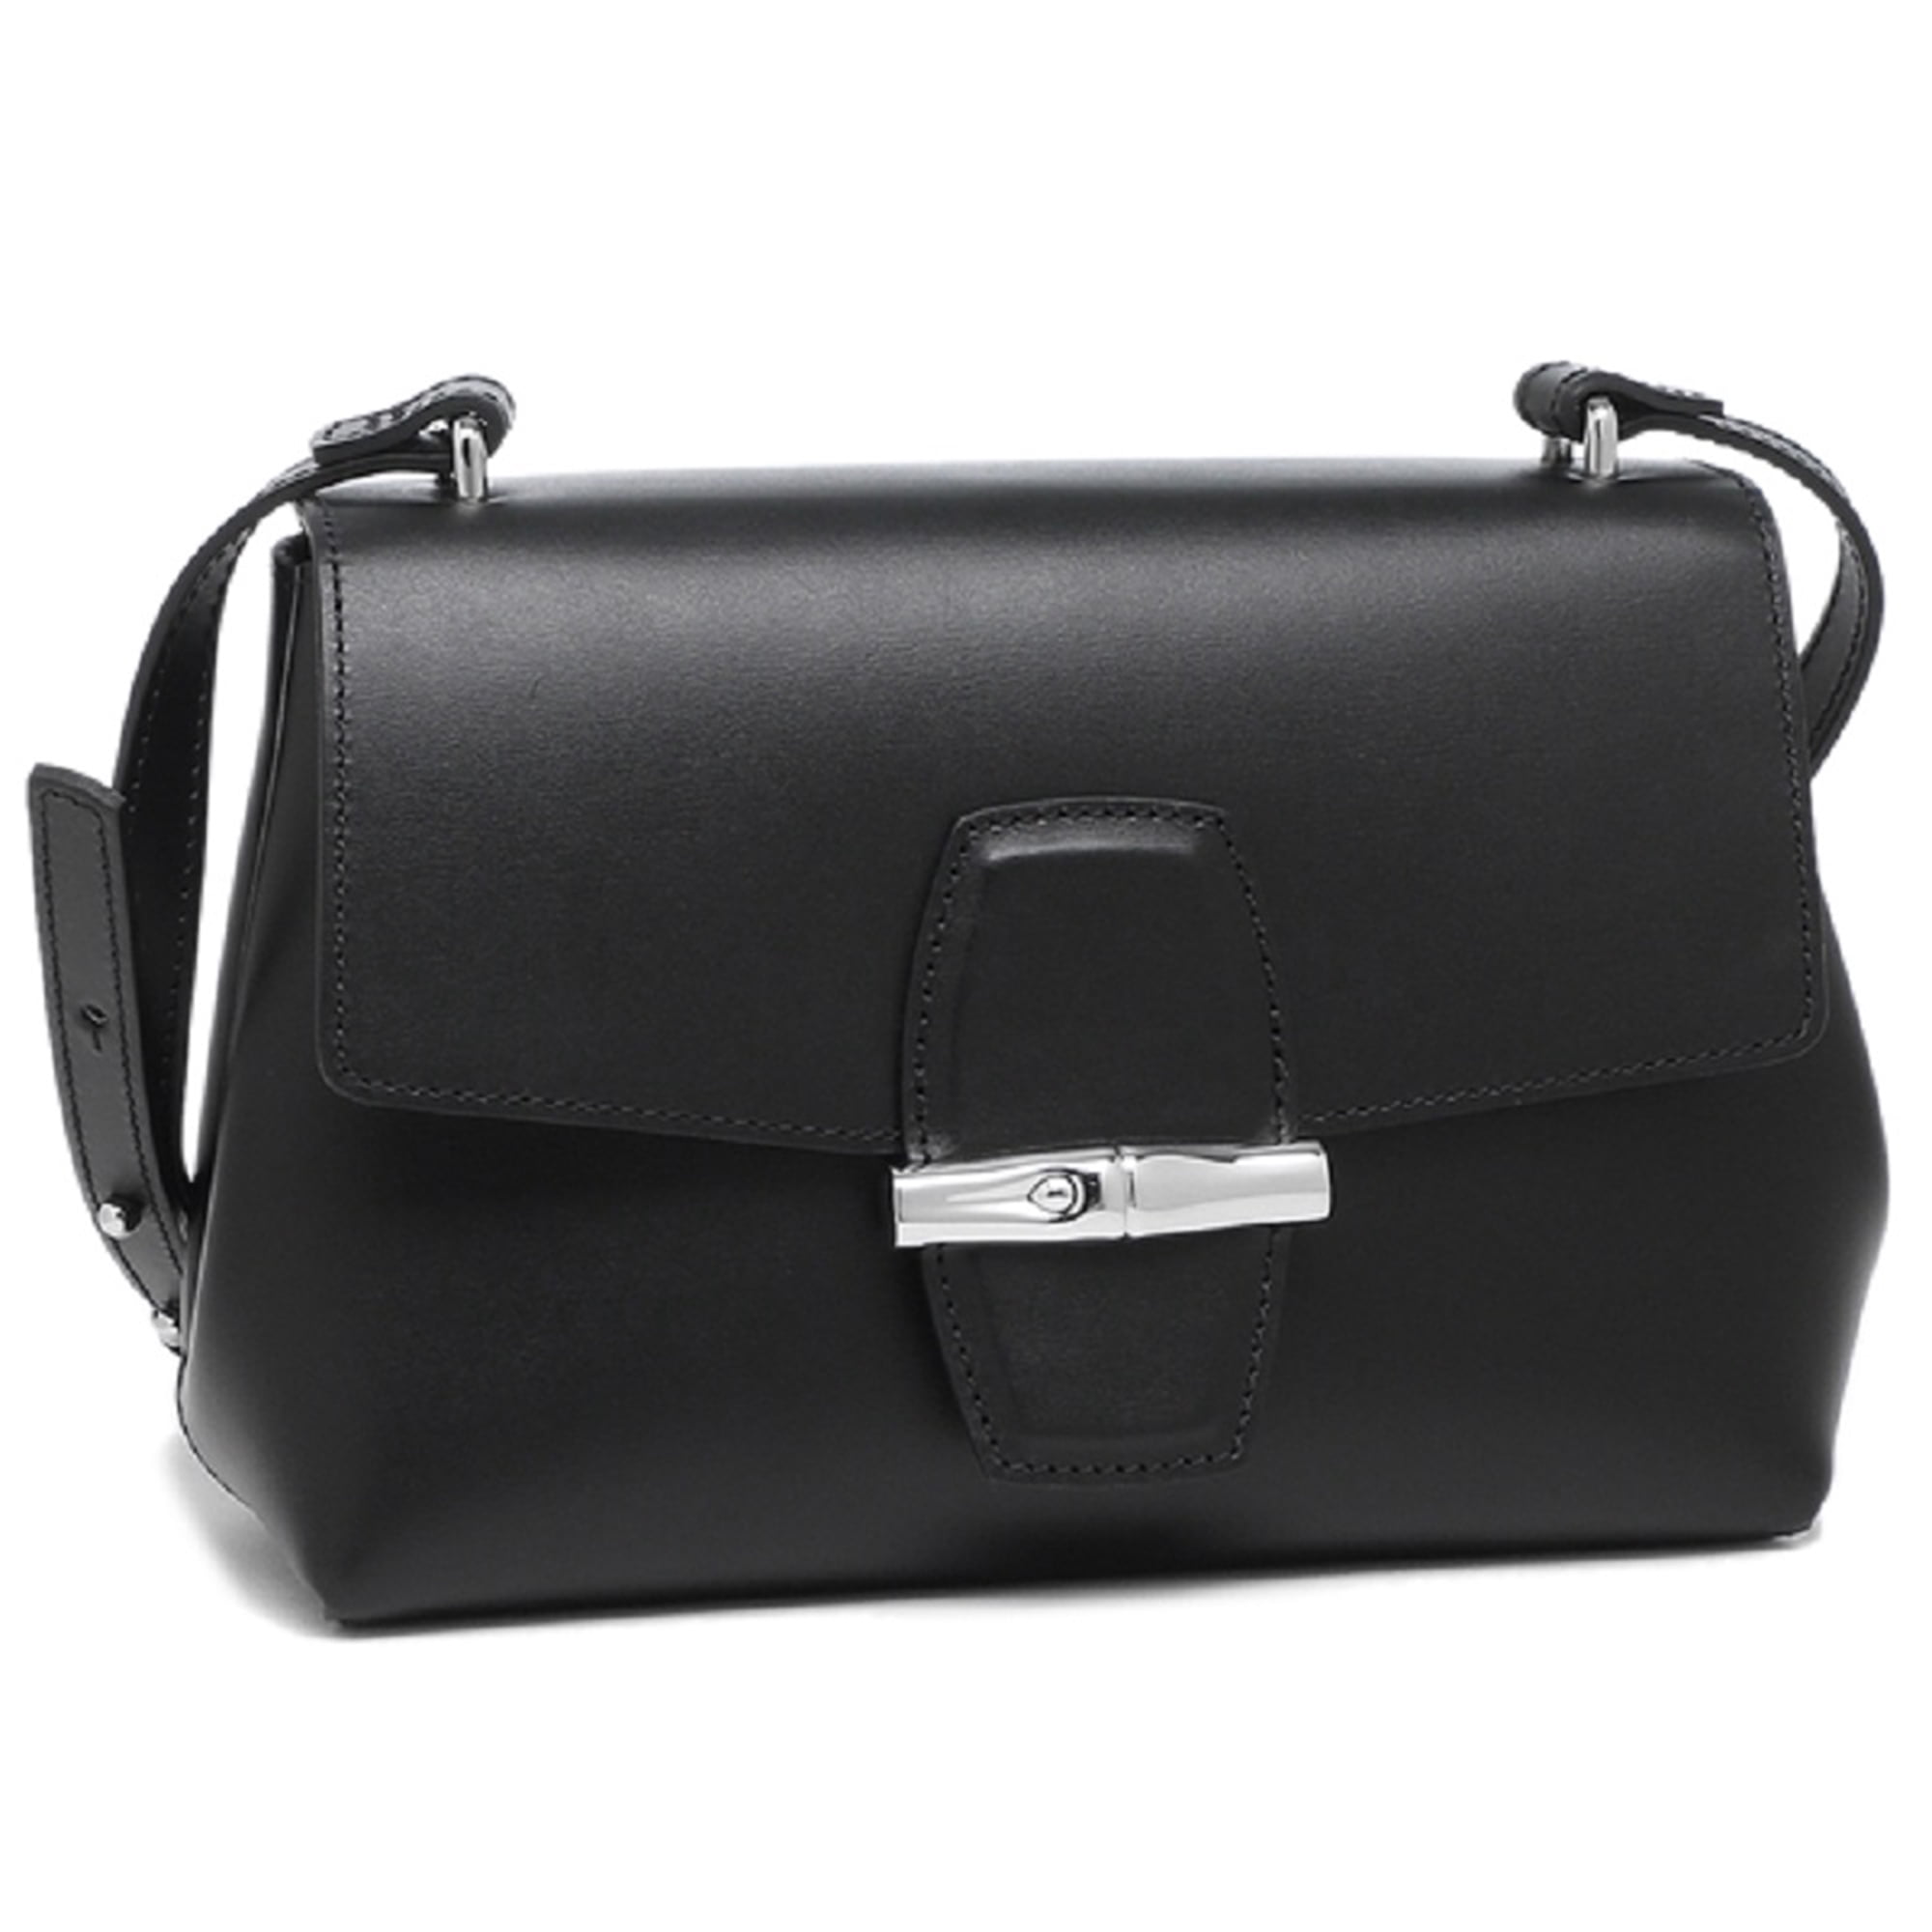 Longchamp Ladies Roseau Leather Shoulder Bag in Black